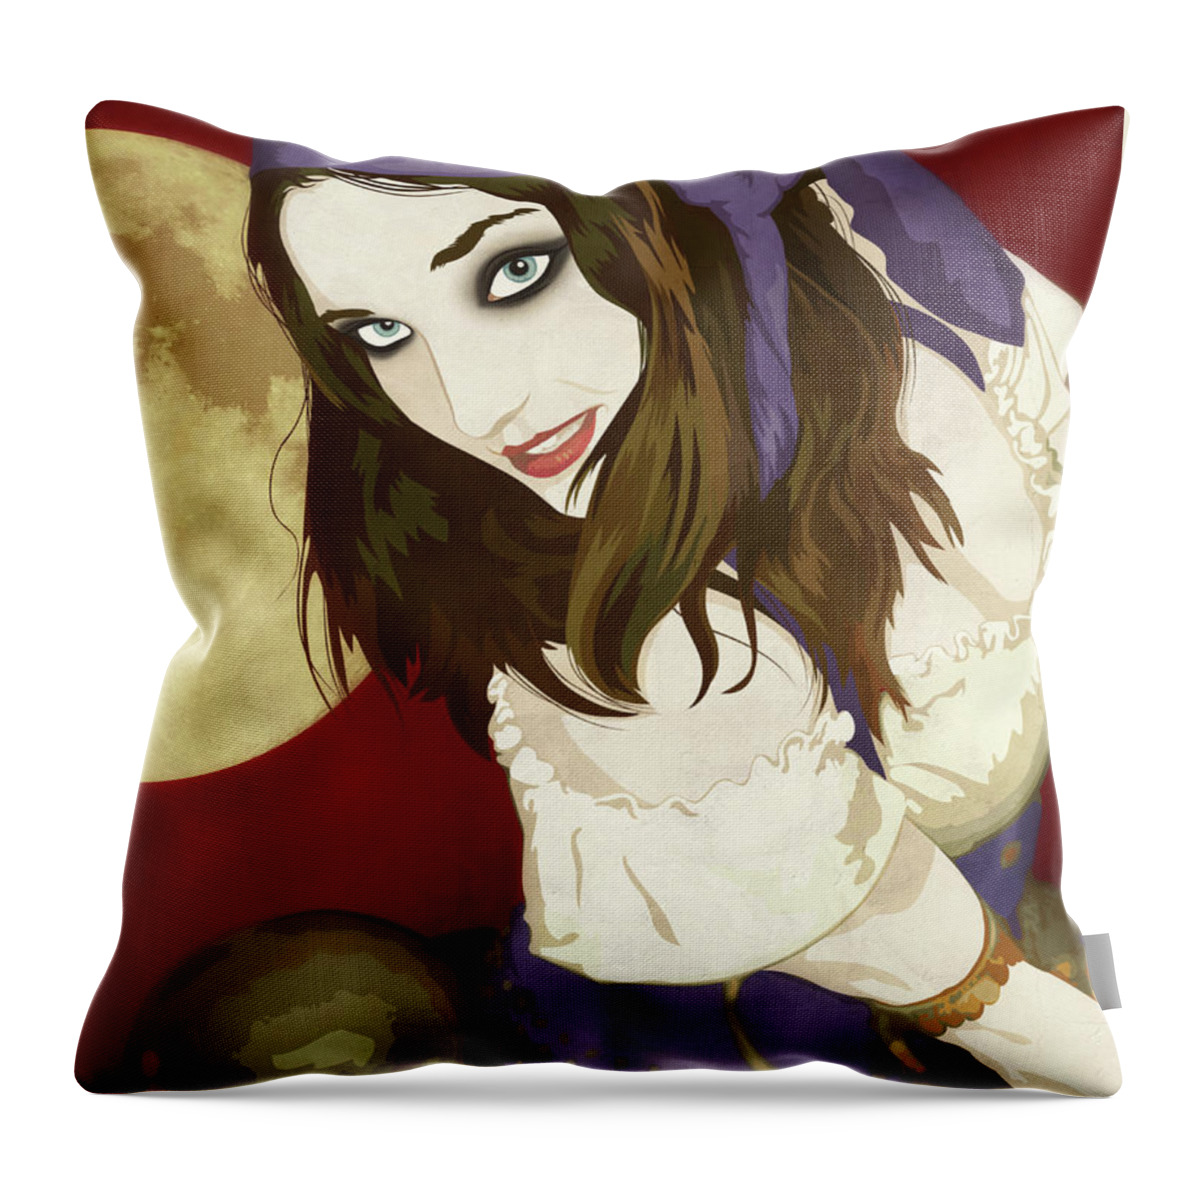 Jason Casteel Throw Pillow featuring the digital art Gypsy by Jason Casteel